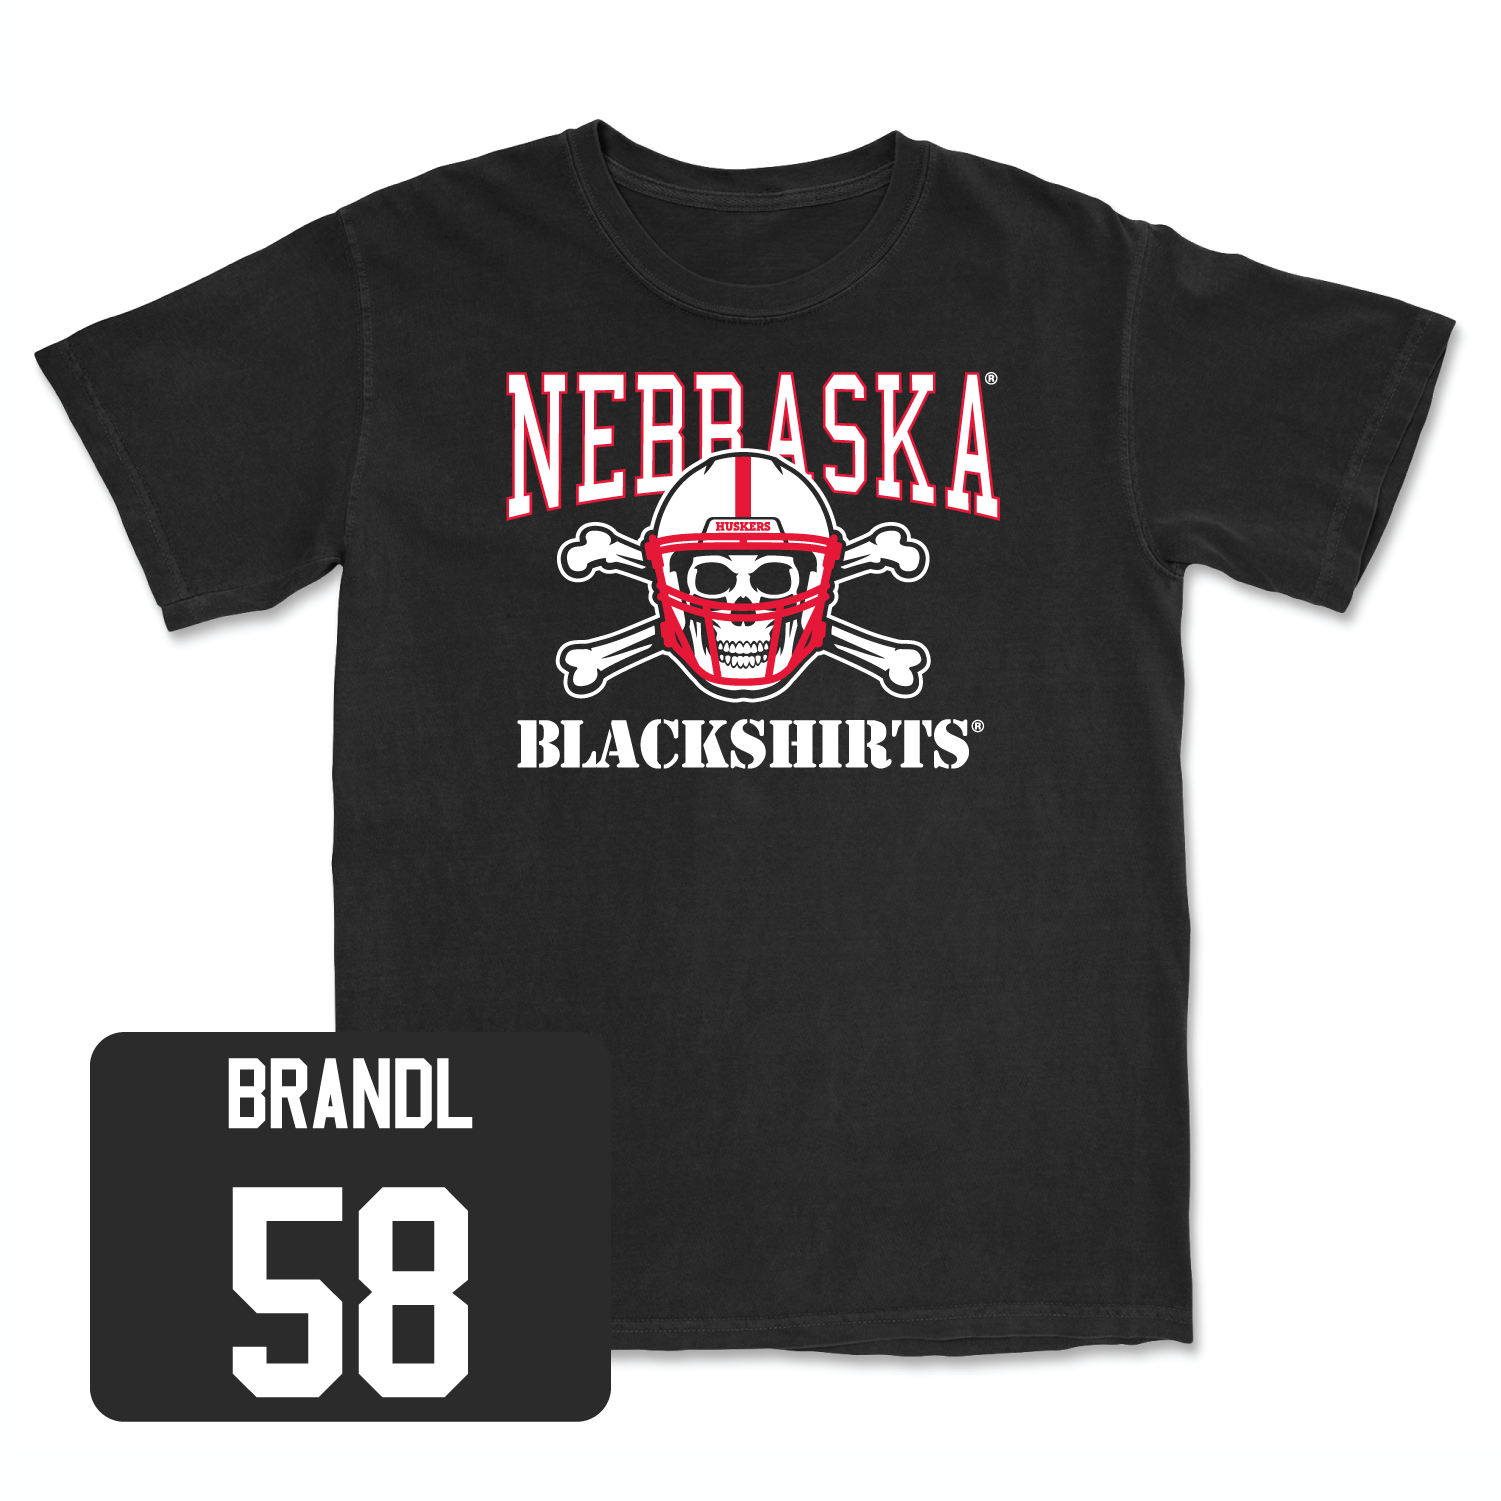 Black Football Blackshirts Tee Medium / Jacob Brandl | #58